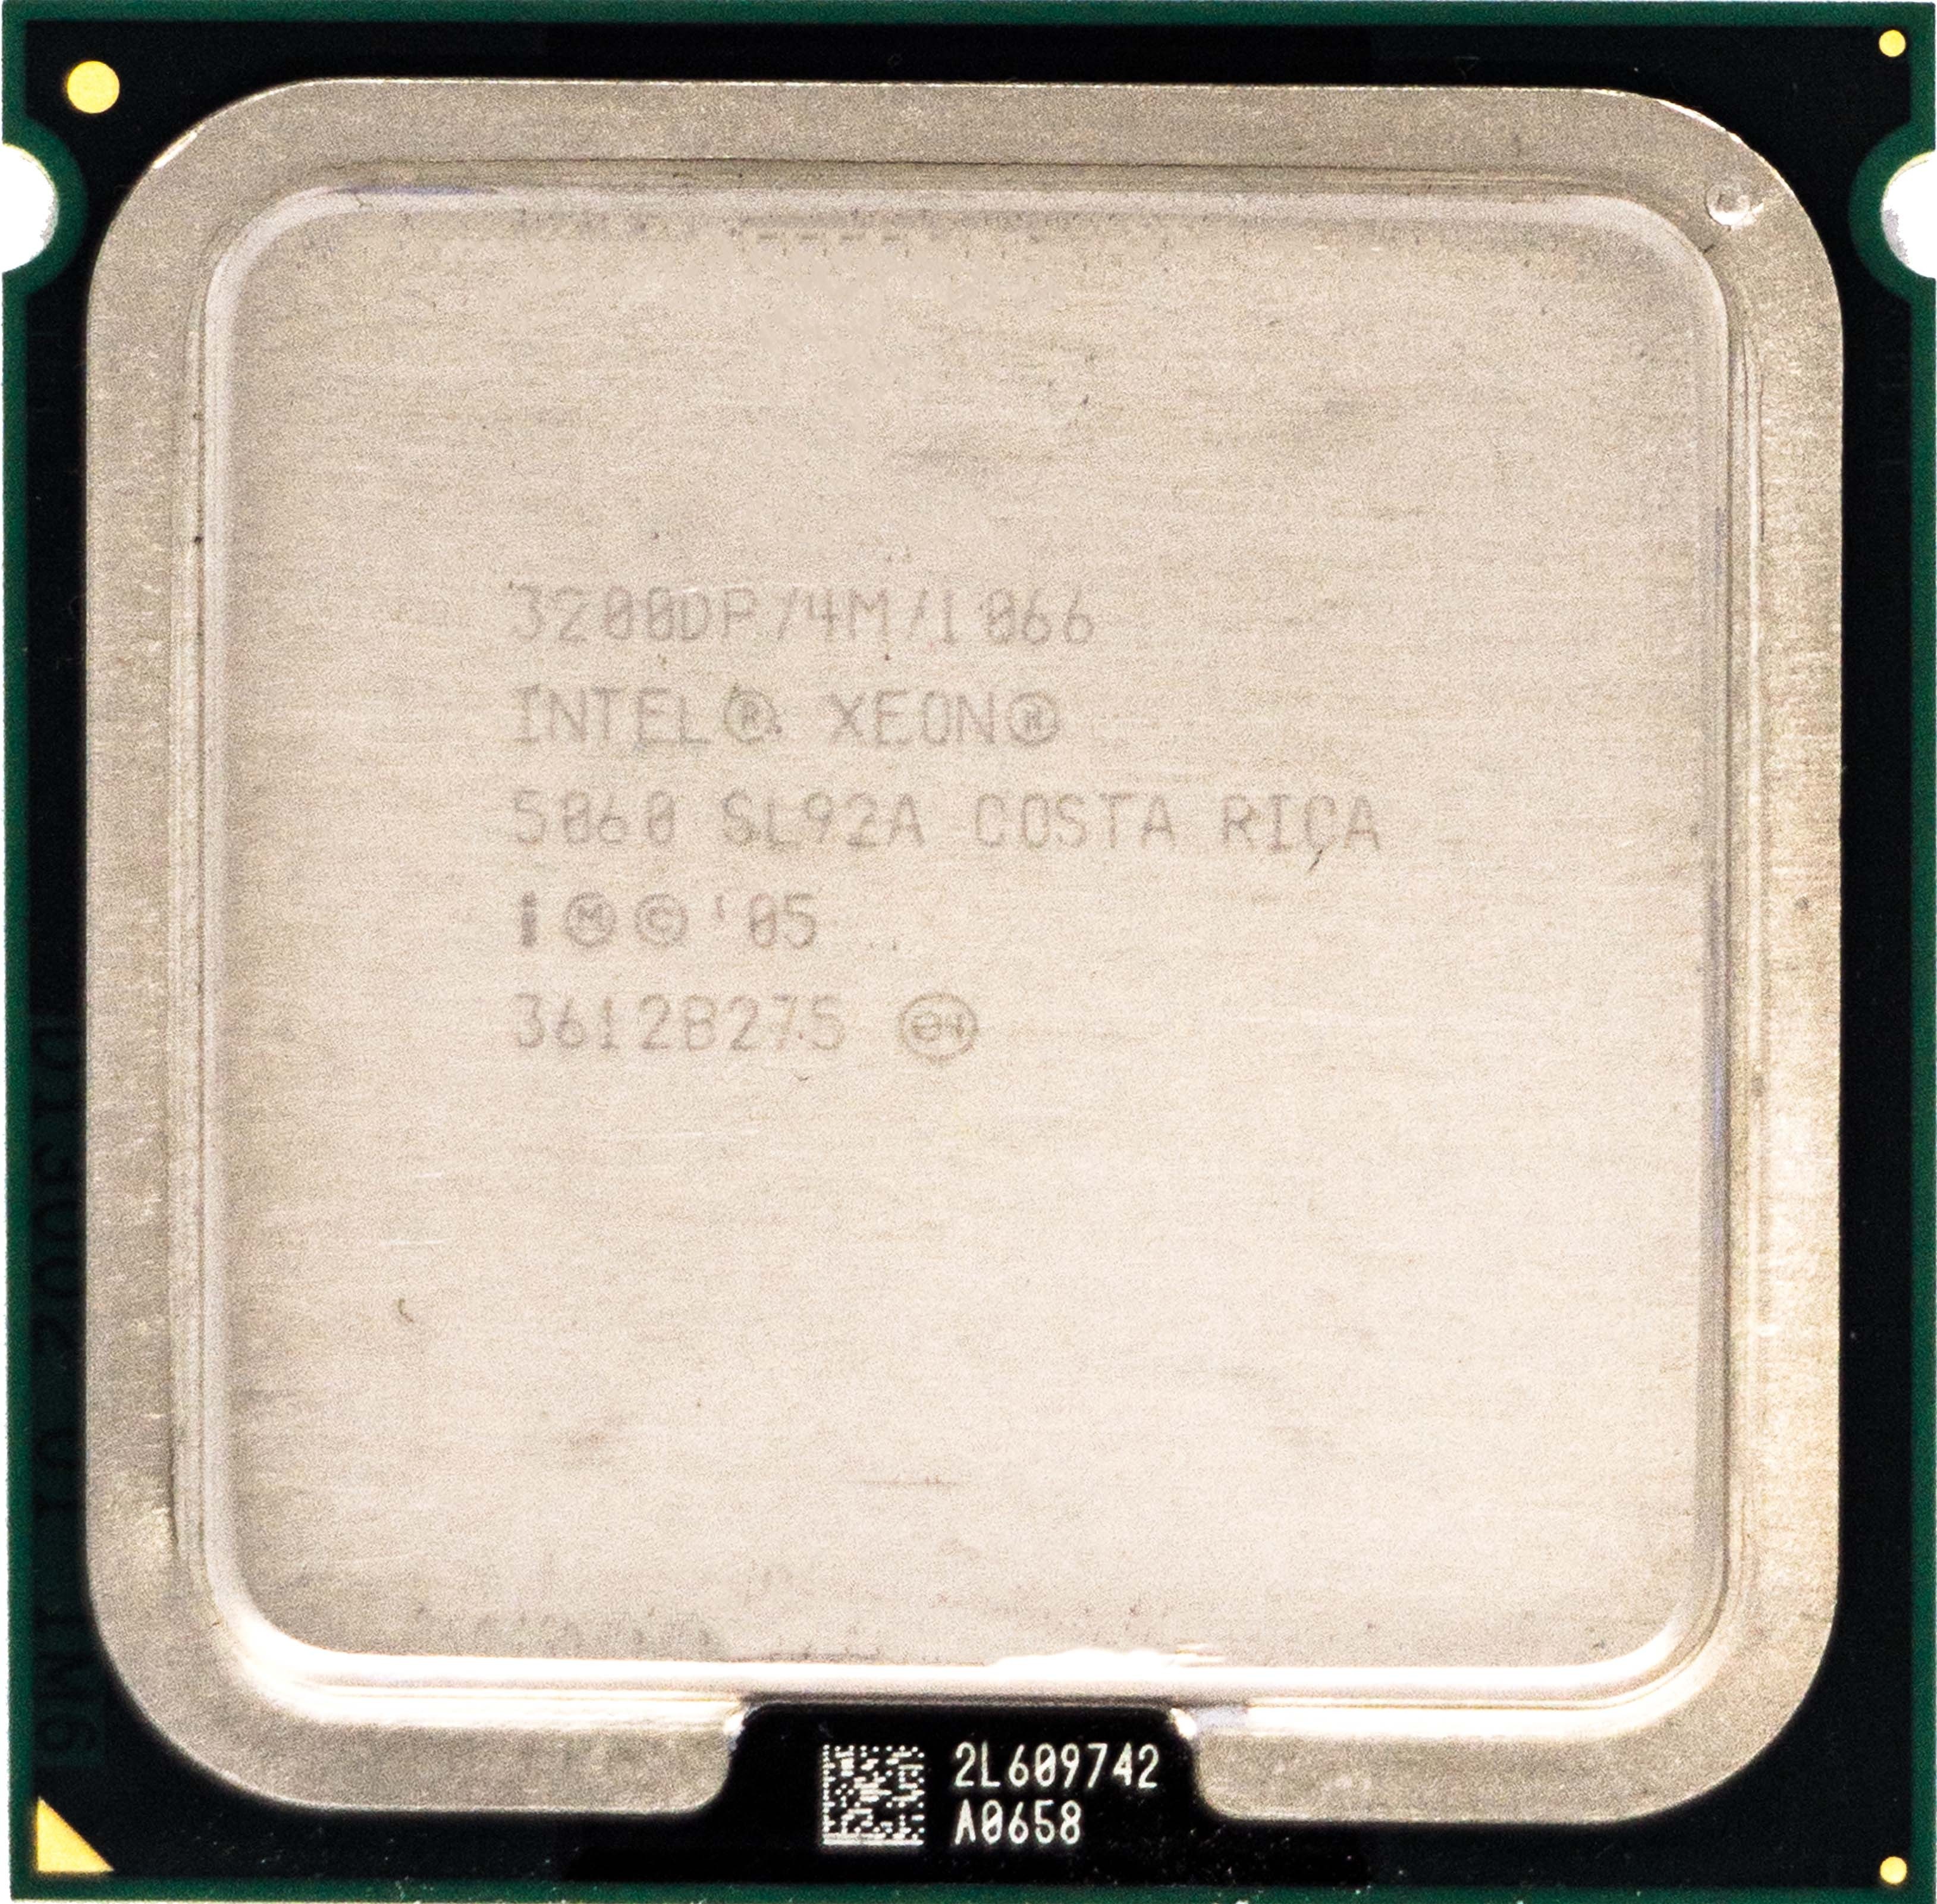 Intel Xeon 5060 (SL92A) 3.20Ghz Dual (2) Core LGA771 130W CPU